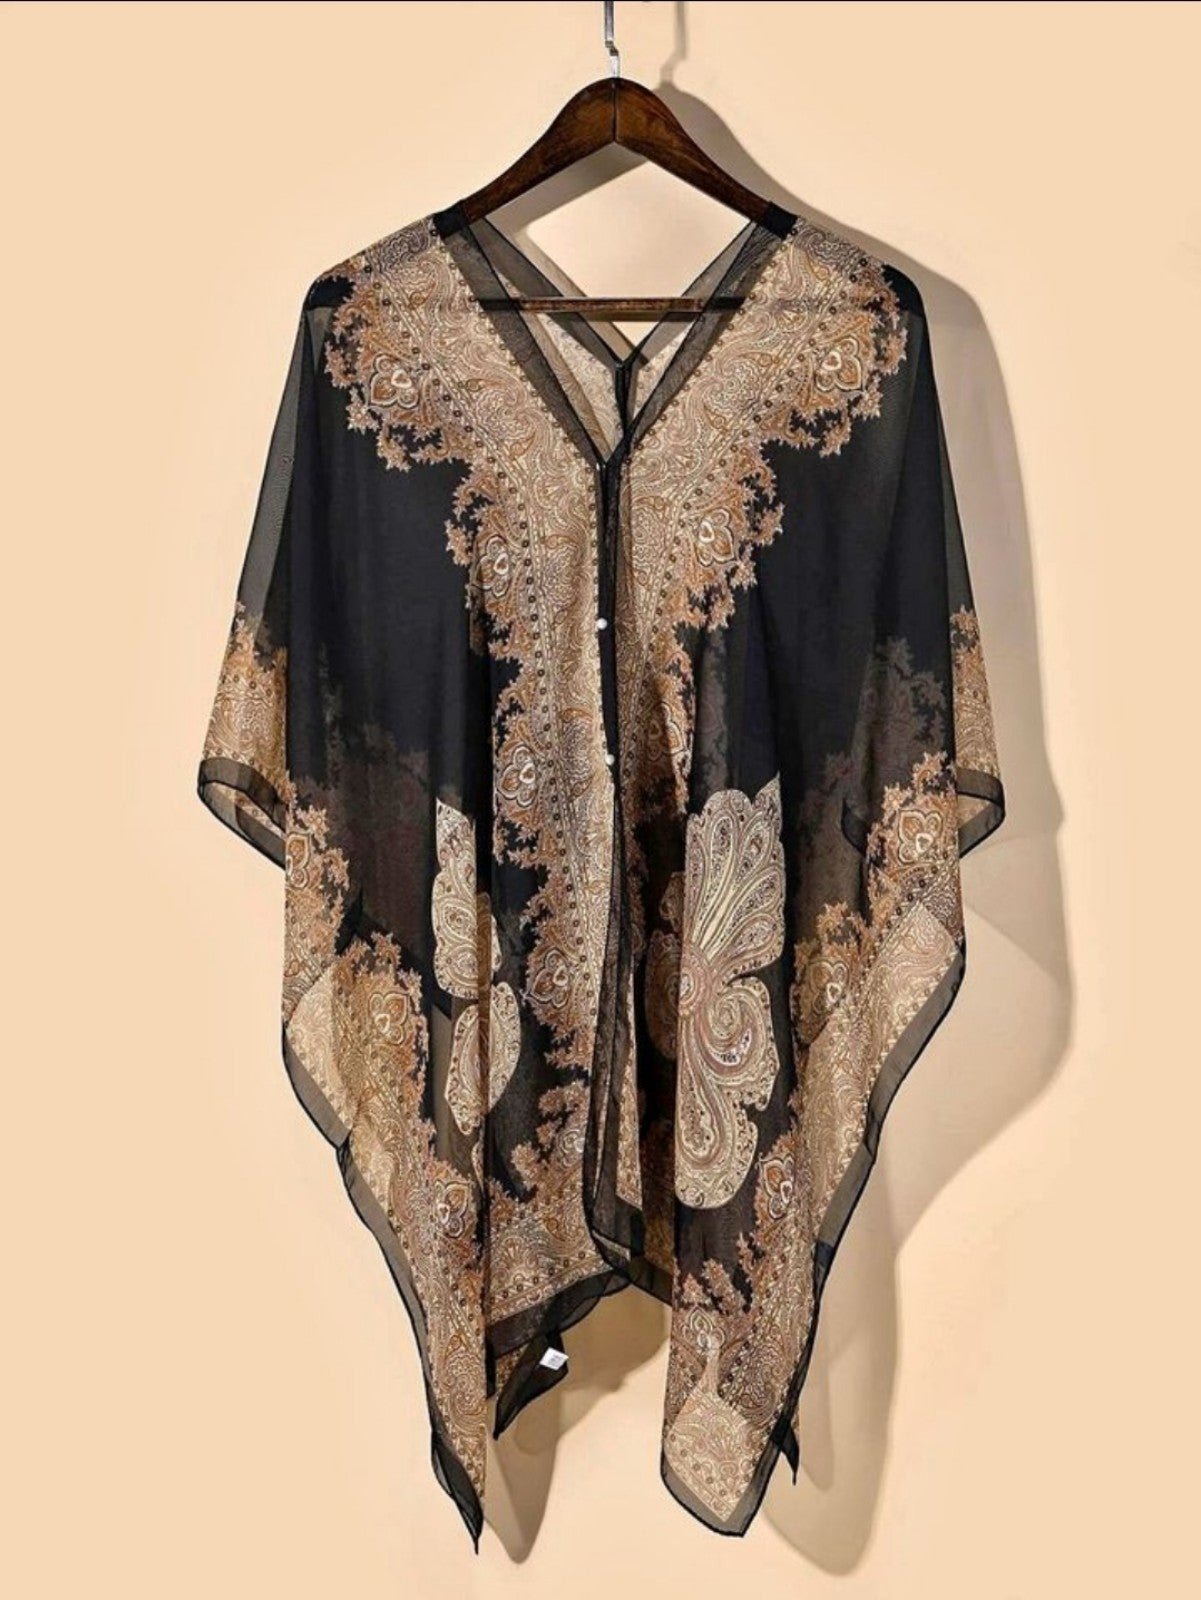 Wholesale price Brand NEW Fashion Poncho Pashmina Scarf for Women - One size fFoU4957D Cool